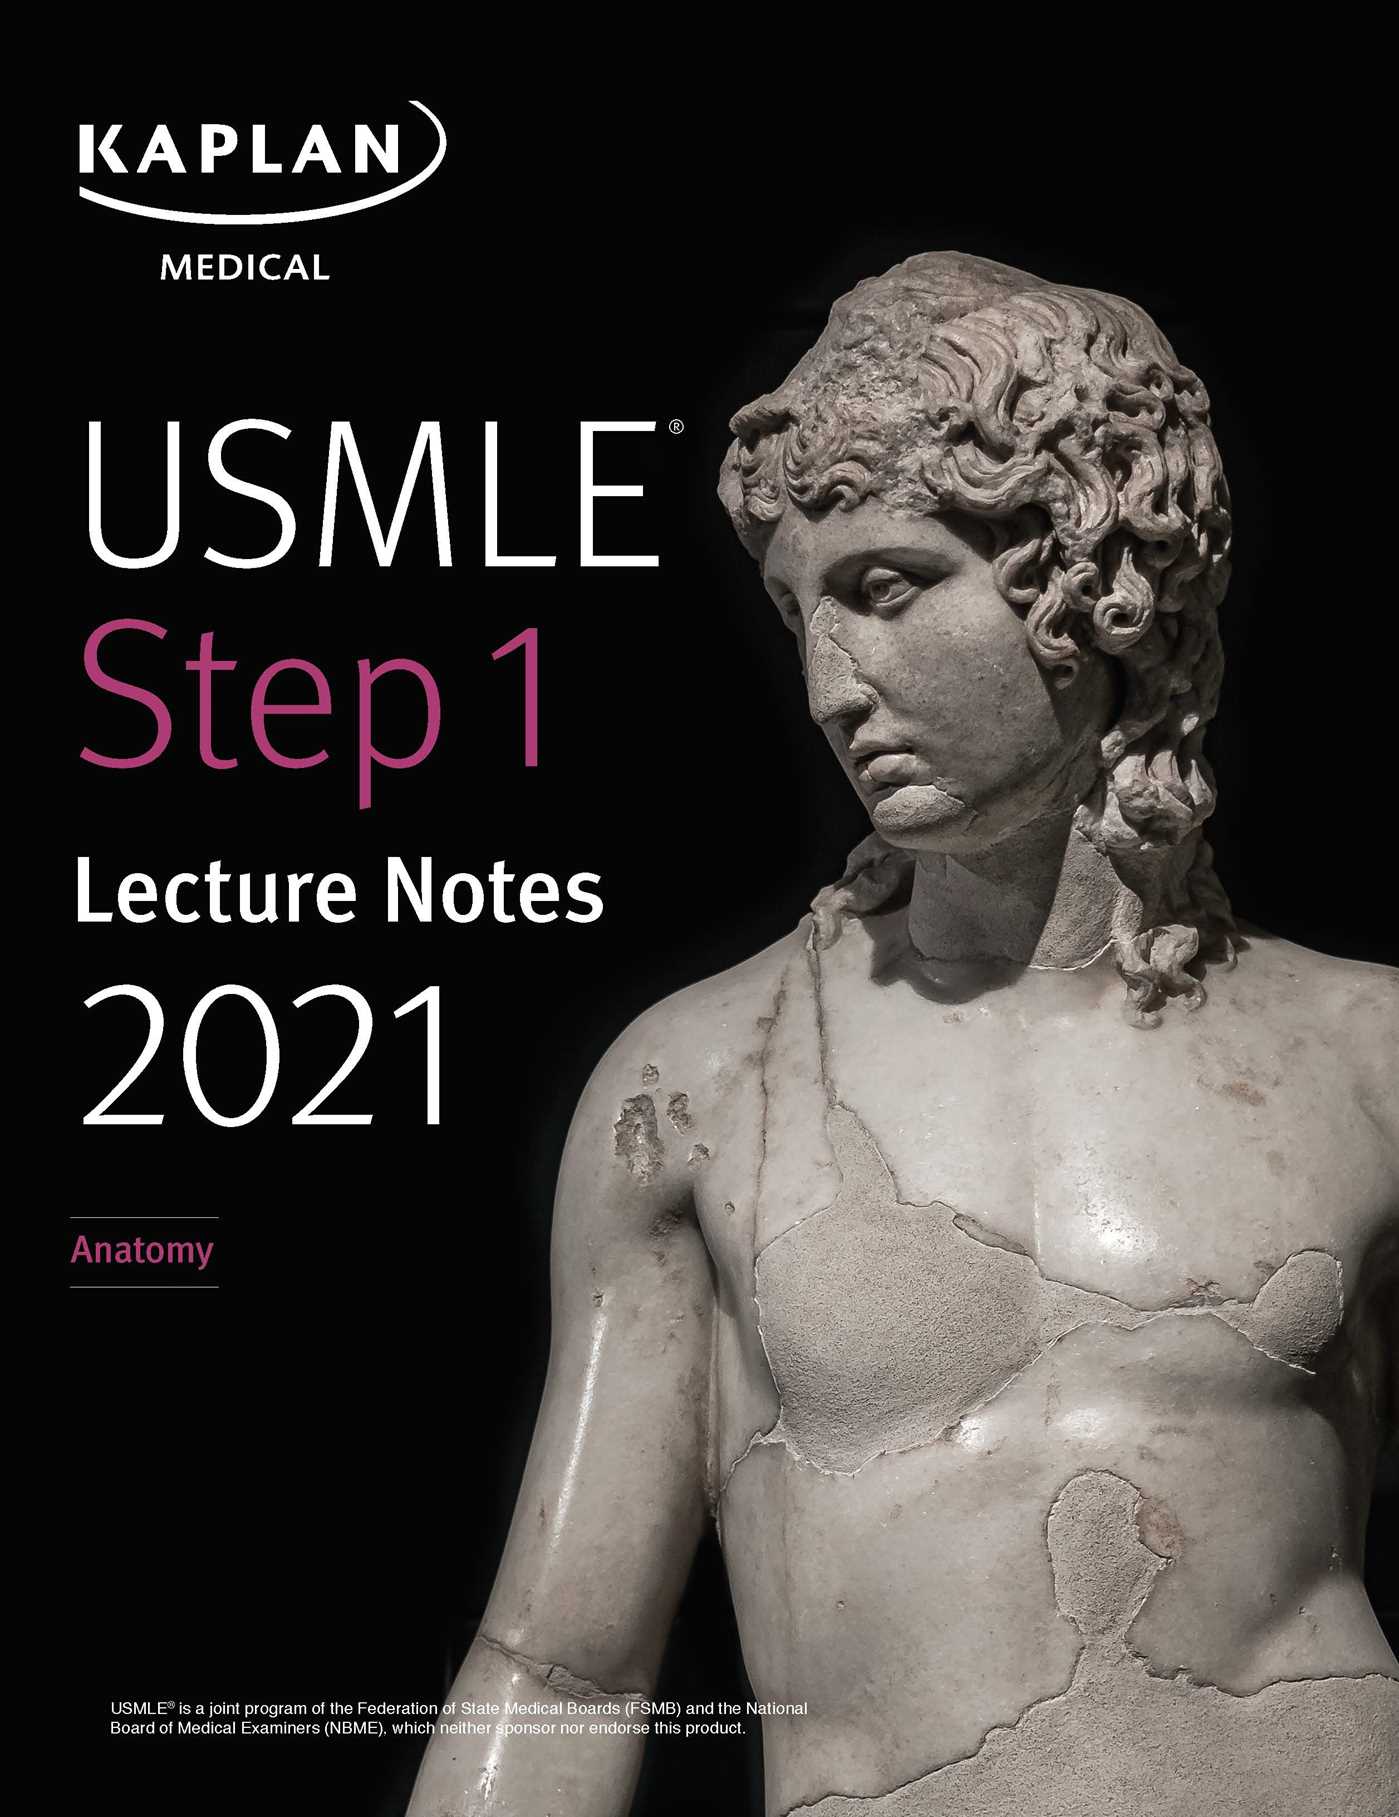 Kaplan USMLE Step 1 Lecture Notes 2021